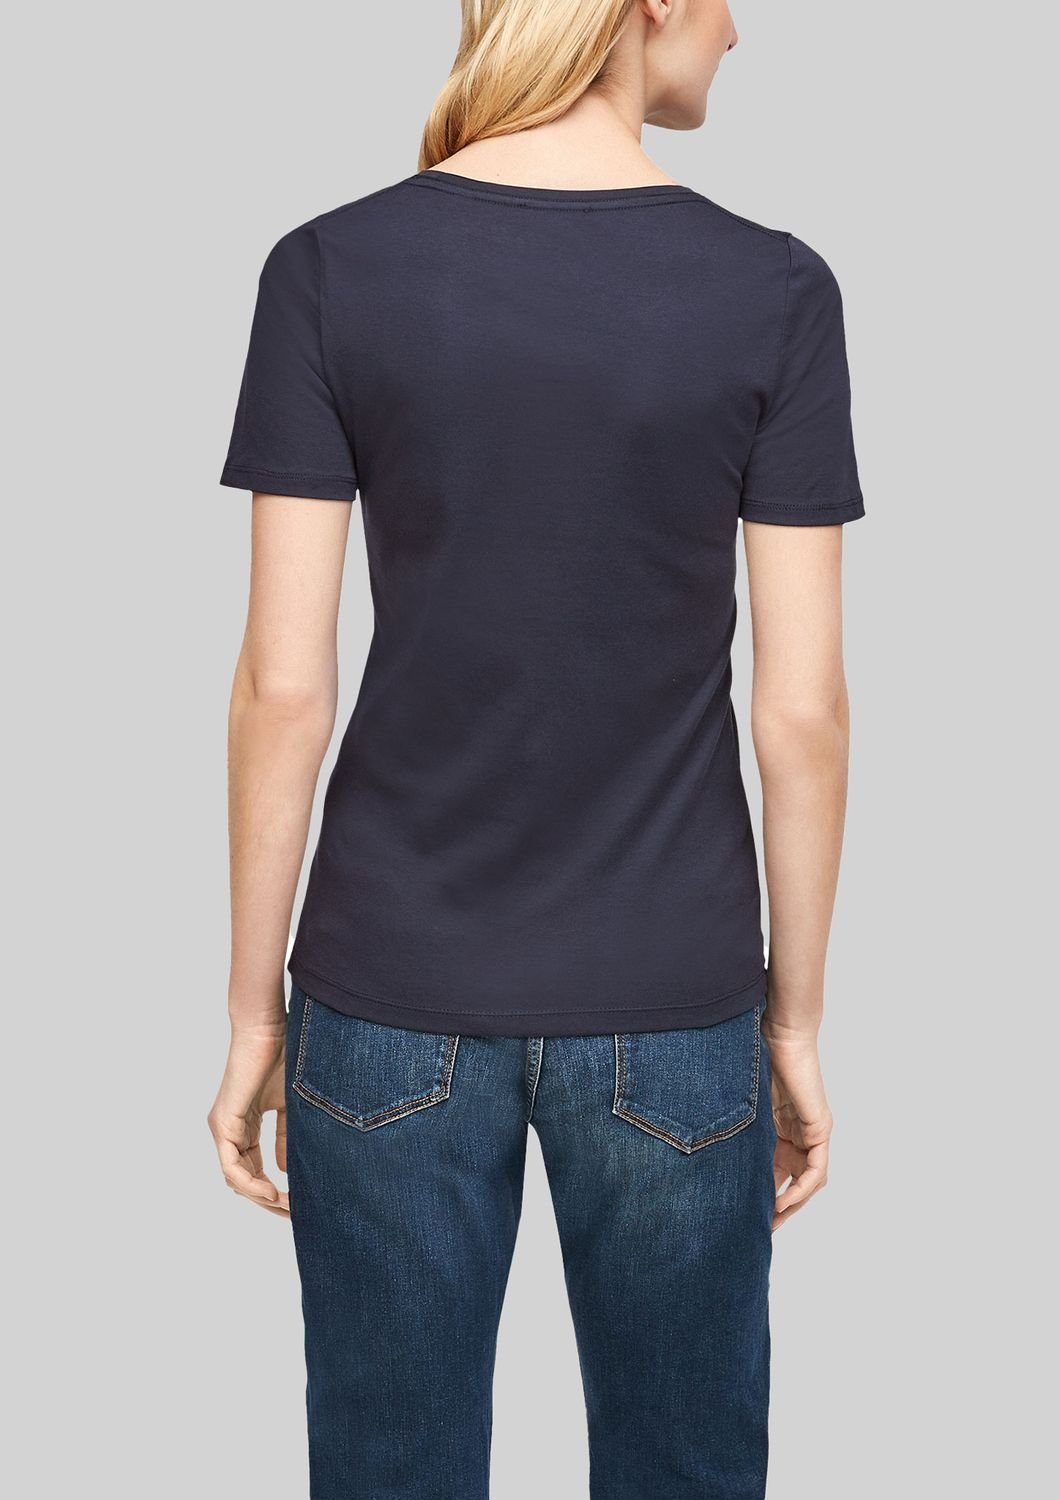 T-Shirt Basic Stück softer Navy Fit, Single-Jersey Qualität, Slim s.Oliver aus 2